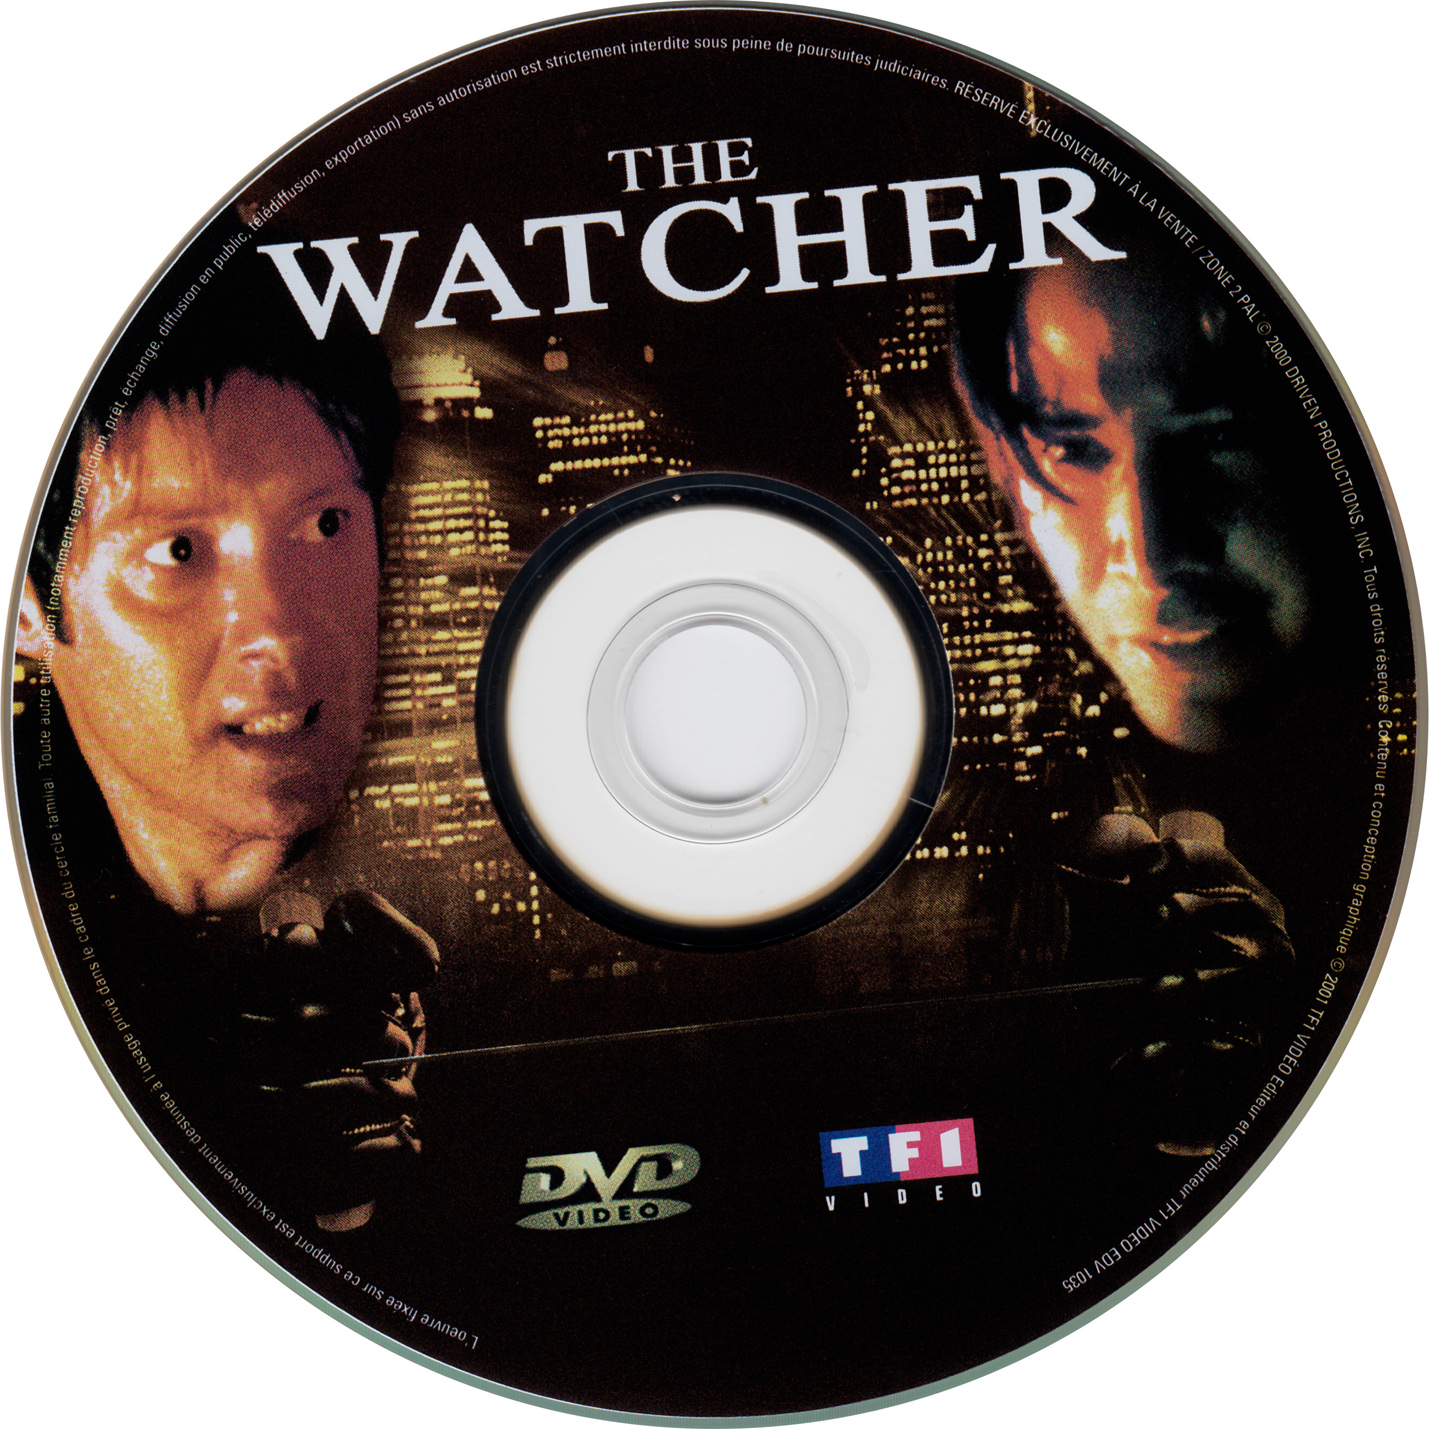 The watcher v2